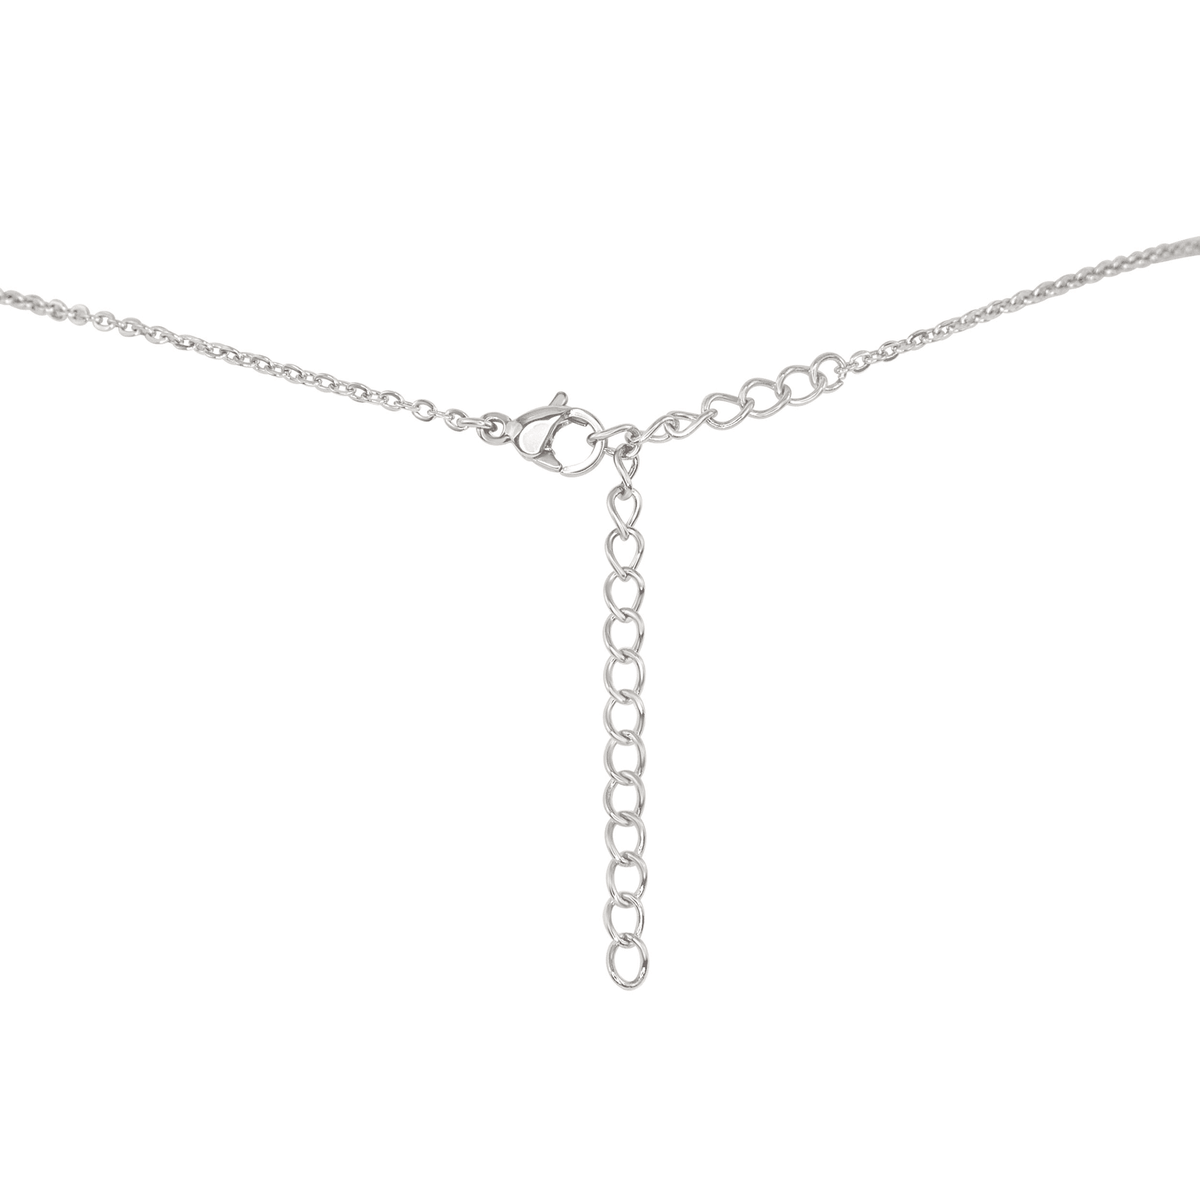 Tiny Emerald Teardrop Necklace - Tiny Emerald Teardrop Necklace - Sterling Silver / Cable - Luna Tide Handmade Crystal Jewellery